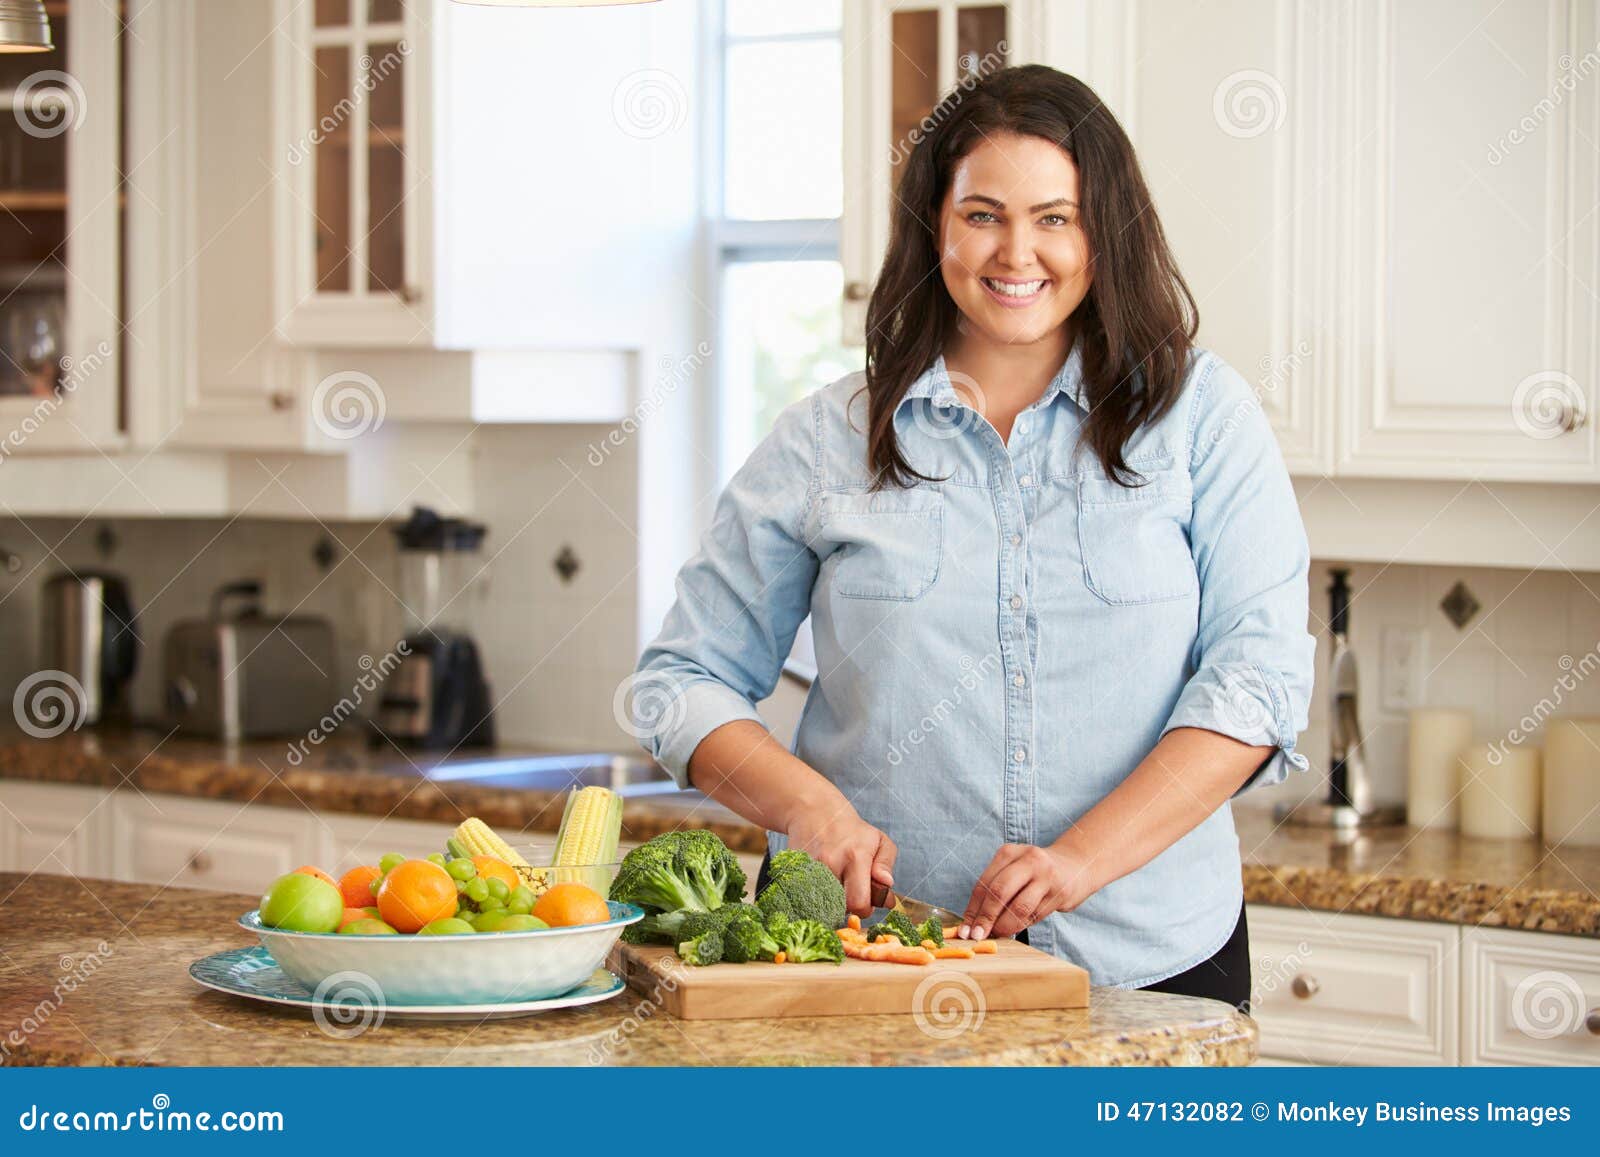 overweight woman preparing vegetables in kitchen